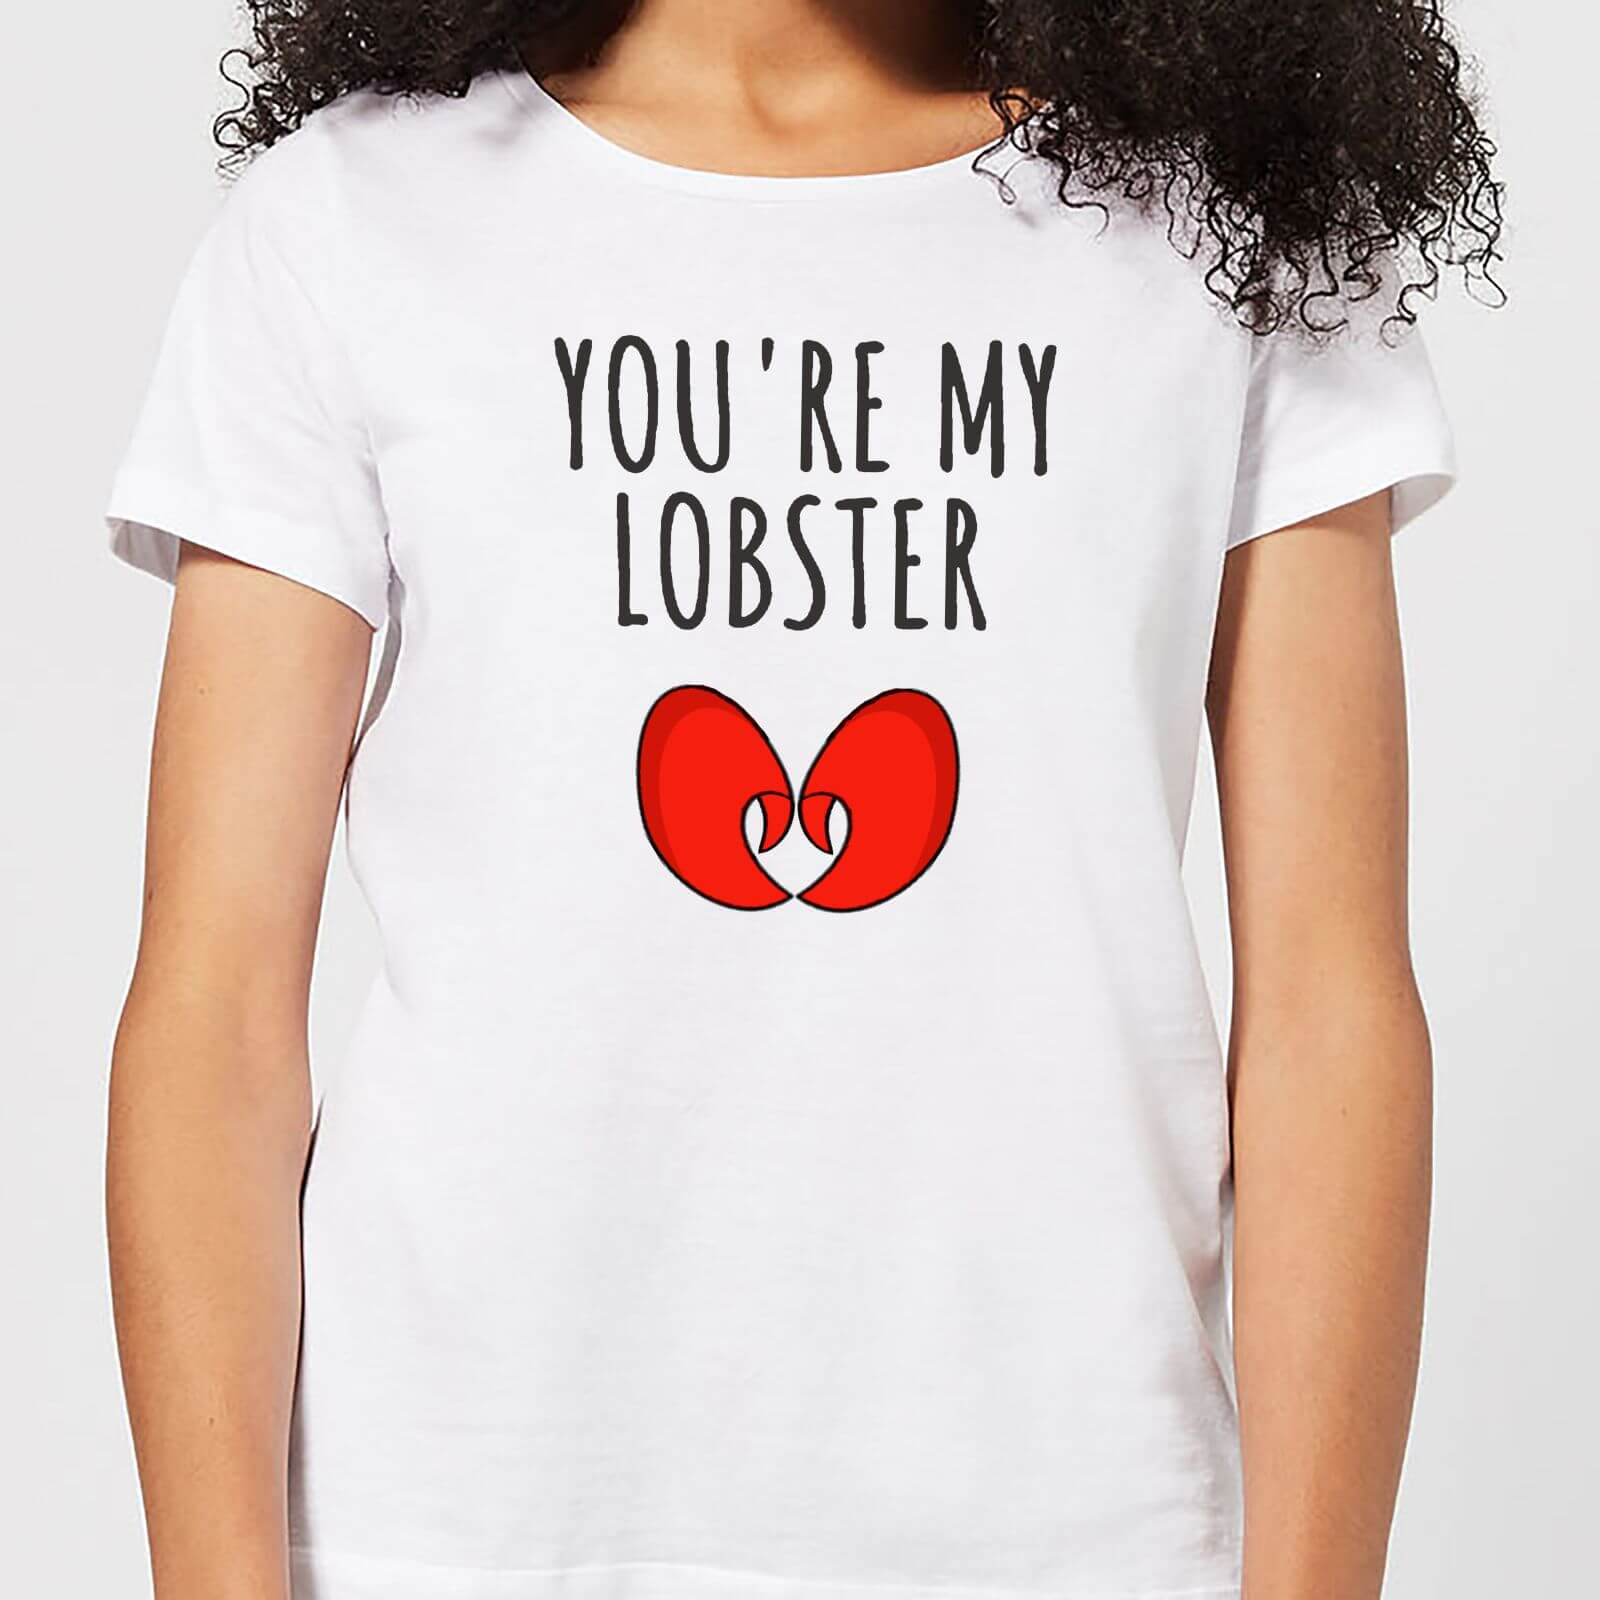 Be My Pretty You're My Lobster Women's T-Shirt - White - 4XL - White